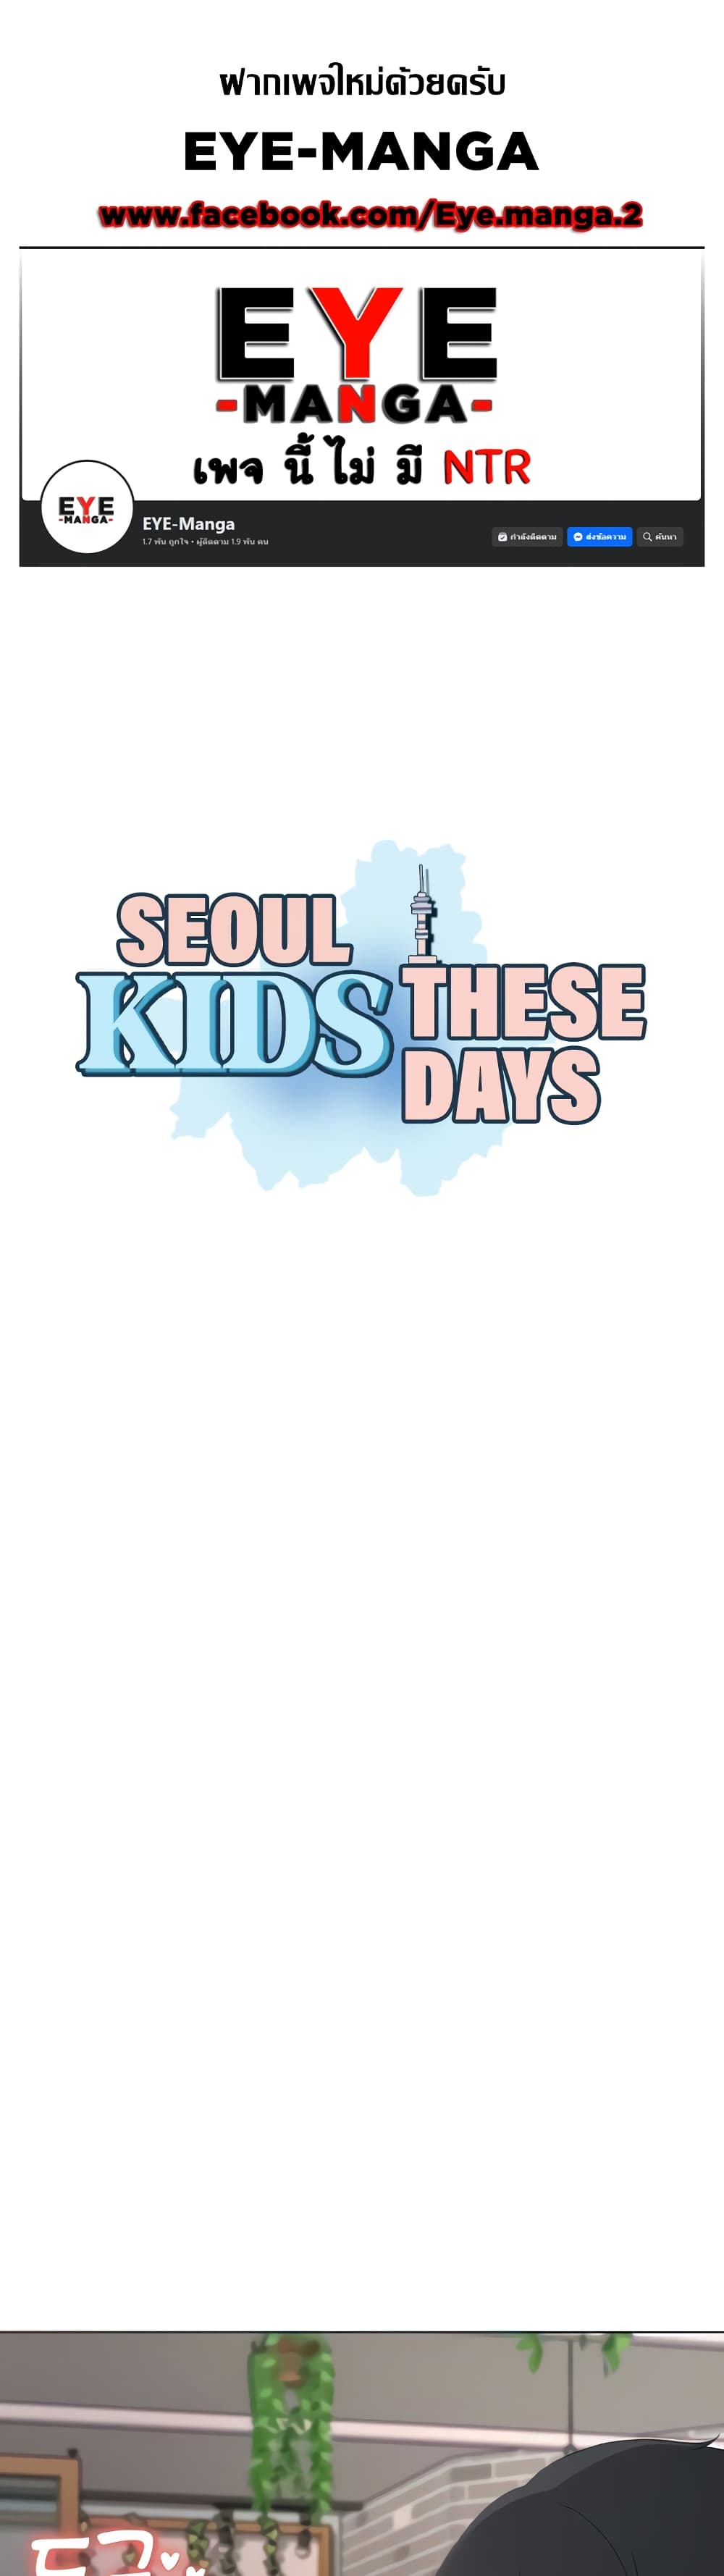 Seoul Kids These Days 23-23